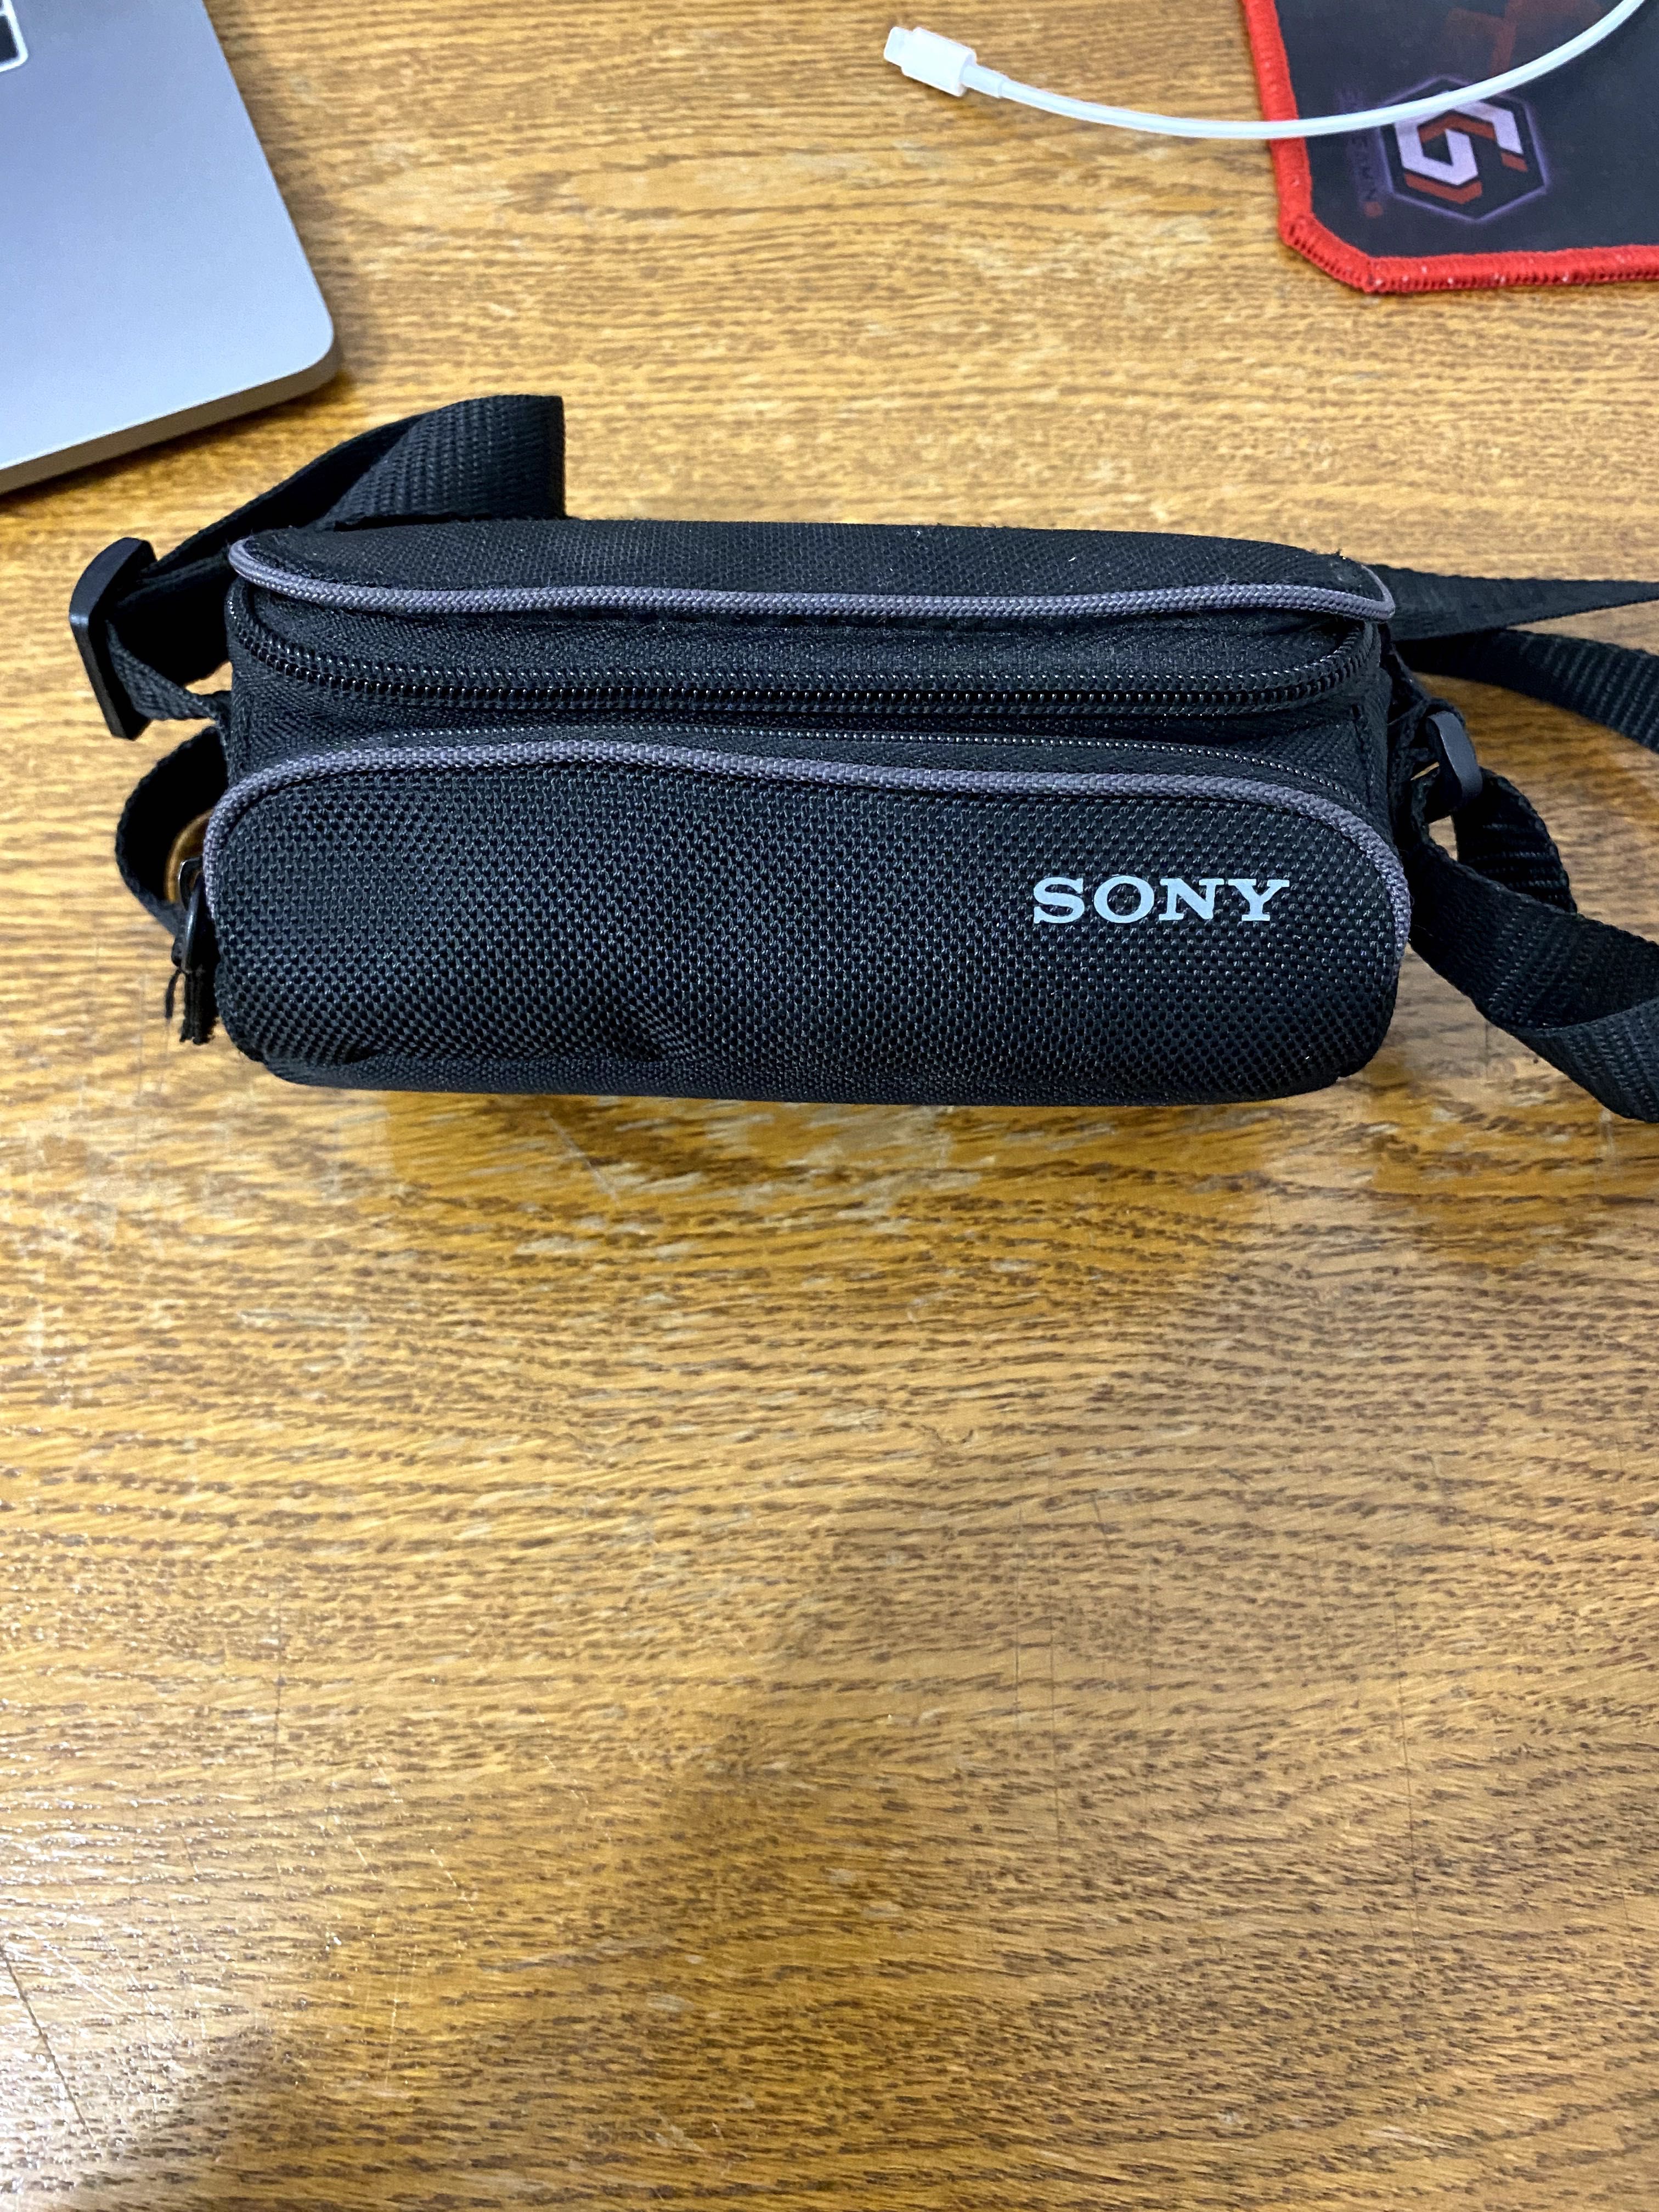 Видеокамера Sony cx-625